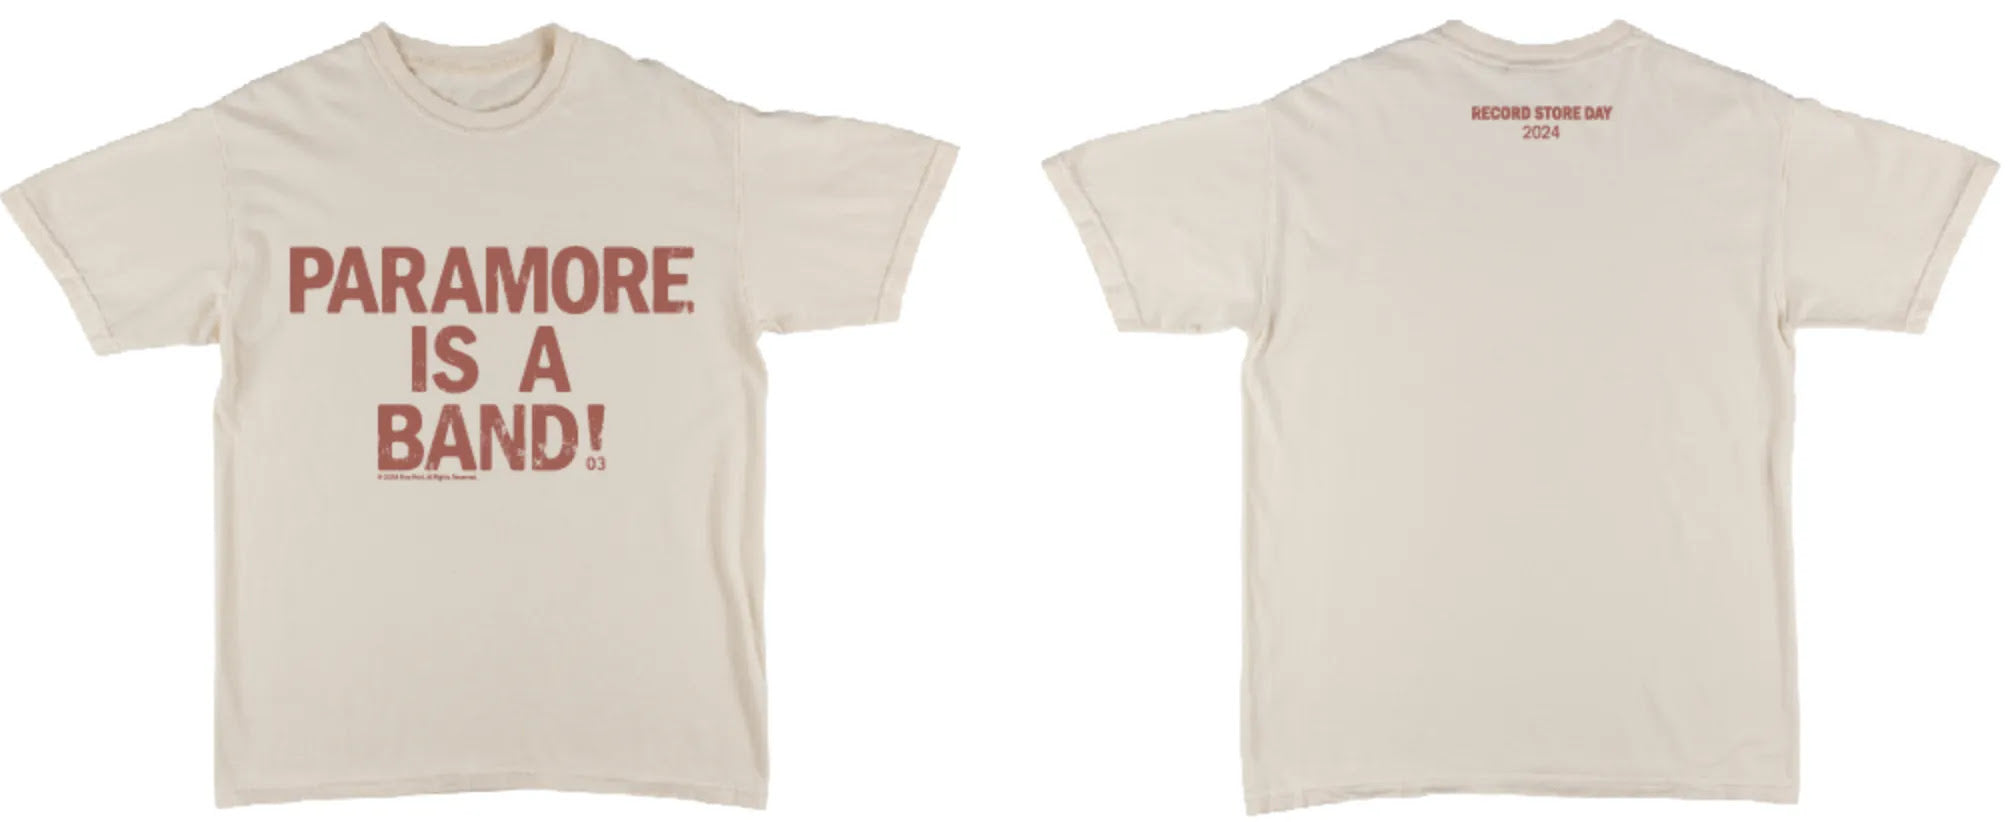 Paramore RSD'24 T-Shirt/Poster Bundle (PREORDER)